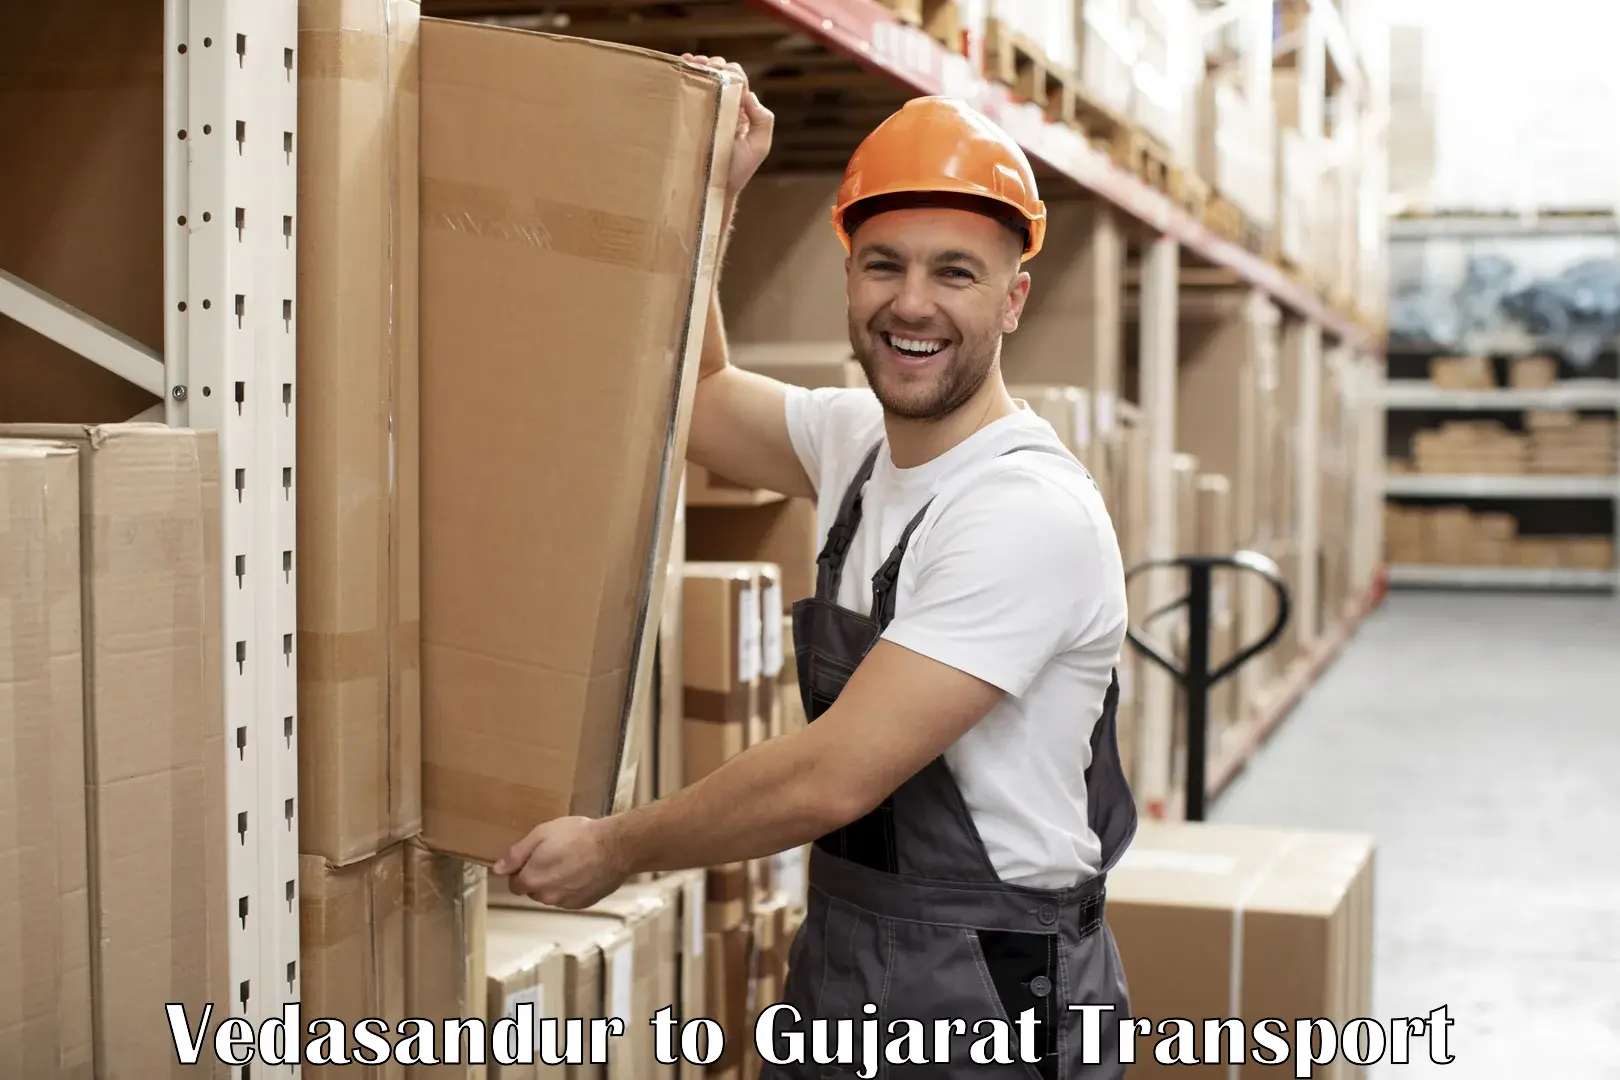 Cycle transportation service Vedasandur to Gujarat